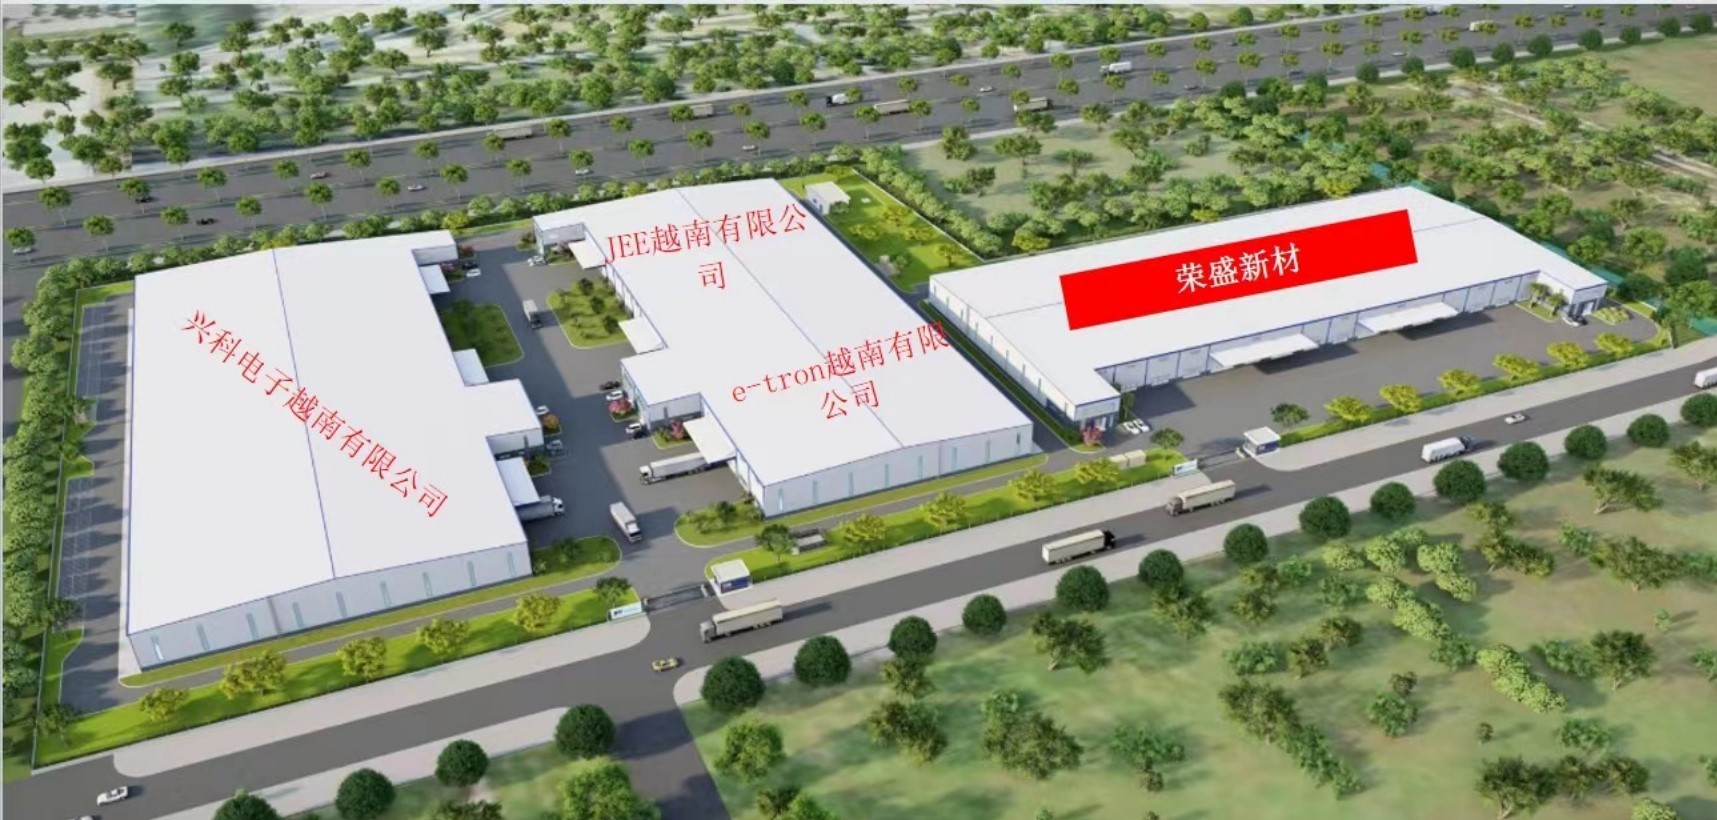 Shanghai Huitian New Material Co., Ltd factory production line